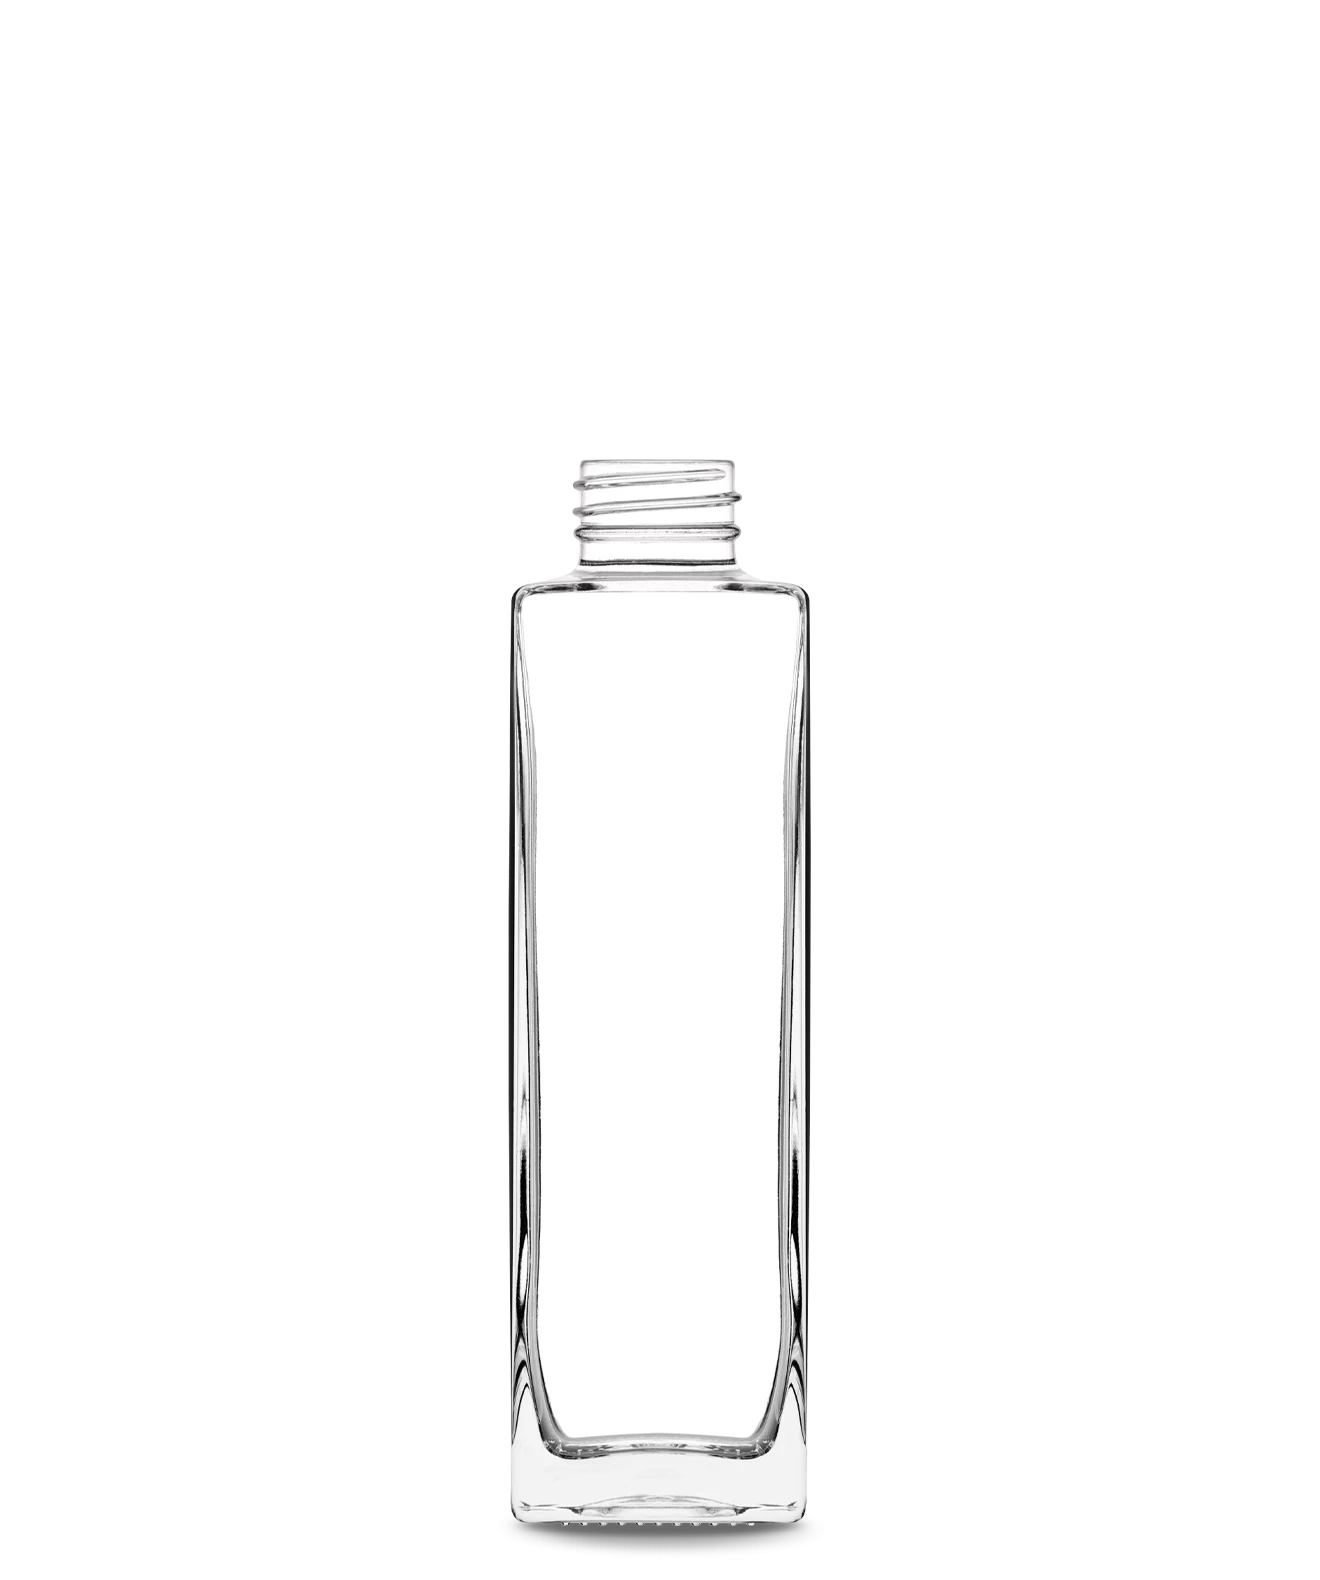 PETRA Fragrances Parfums ambiance Vetroelite View 1